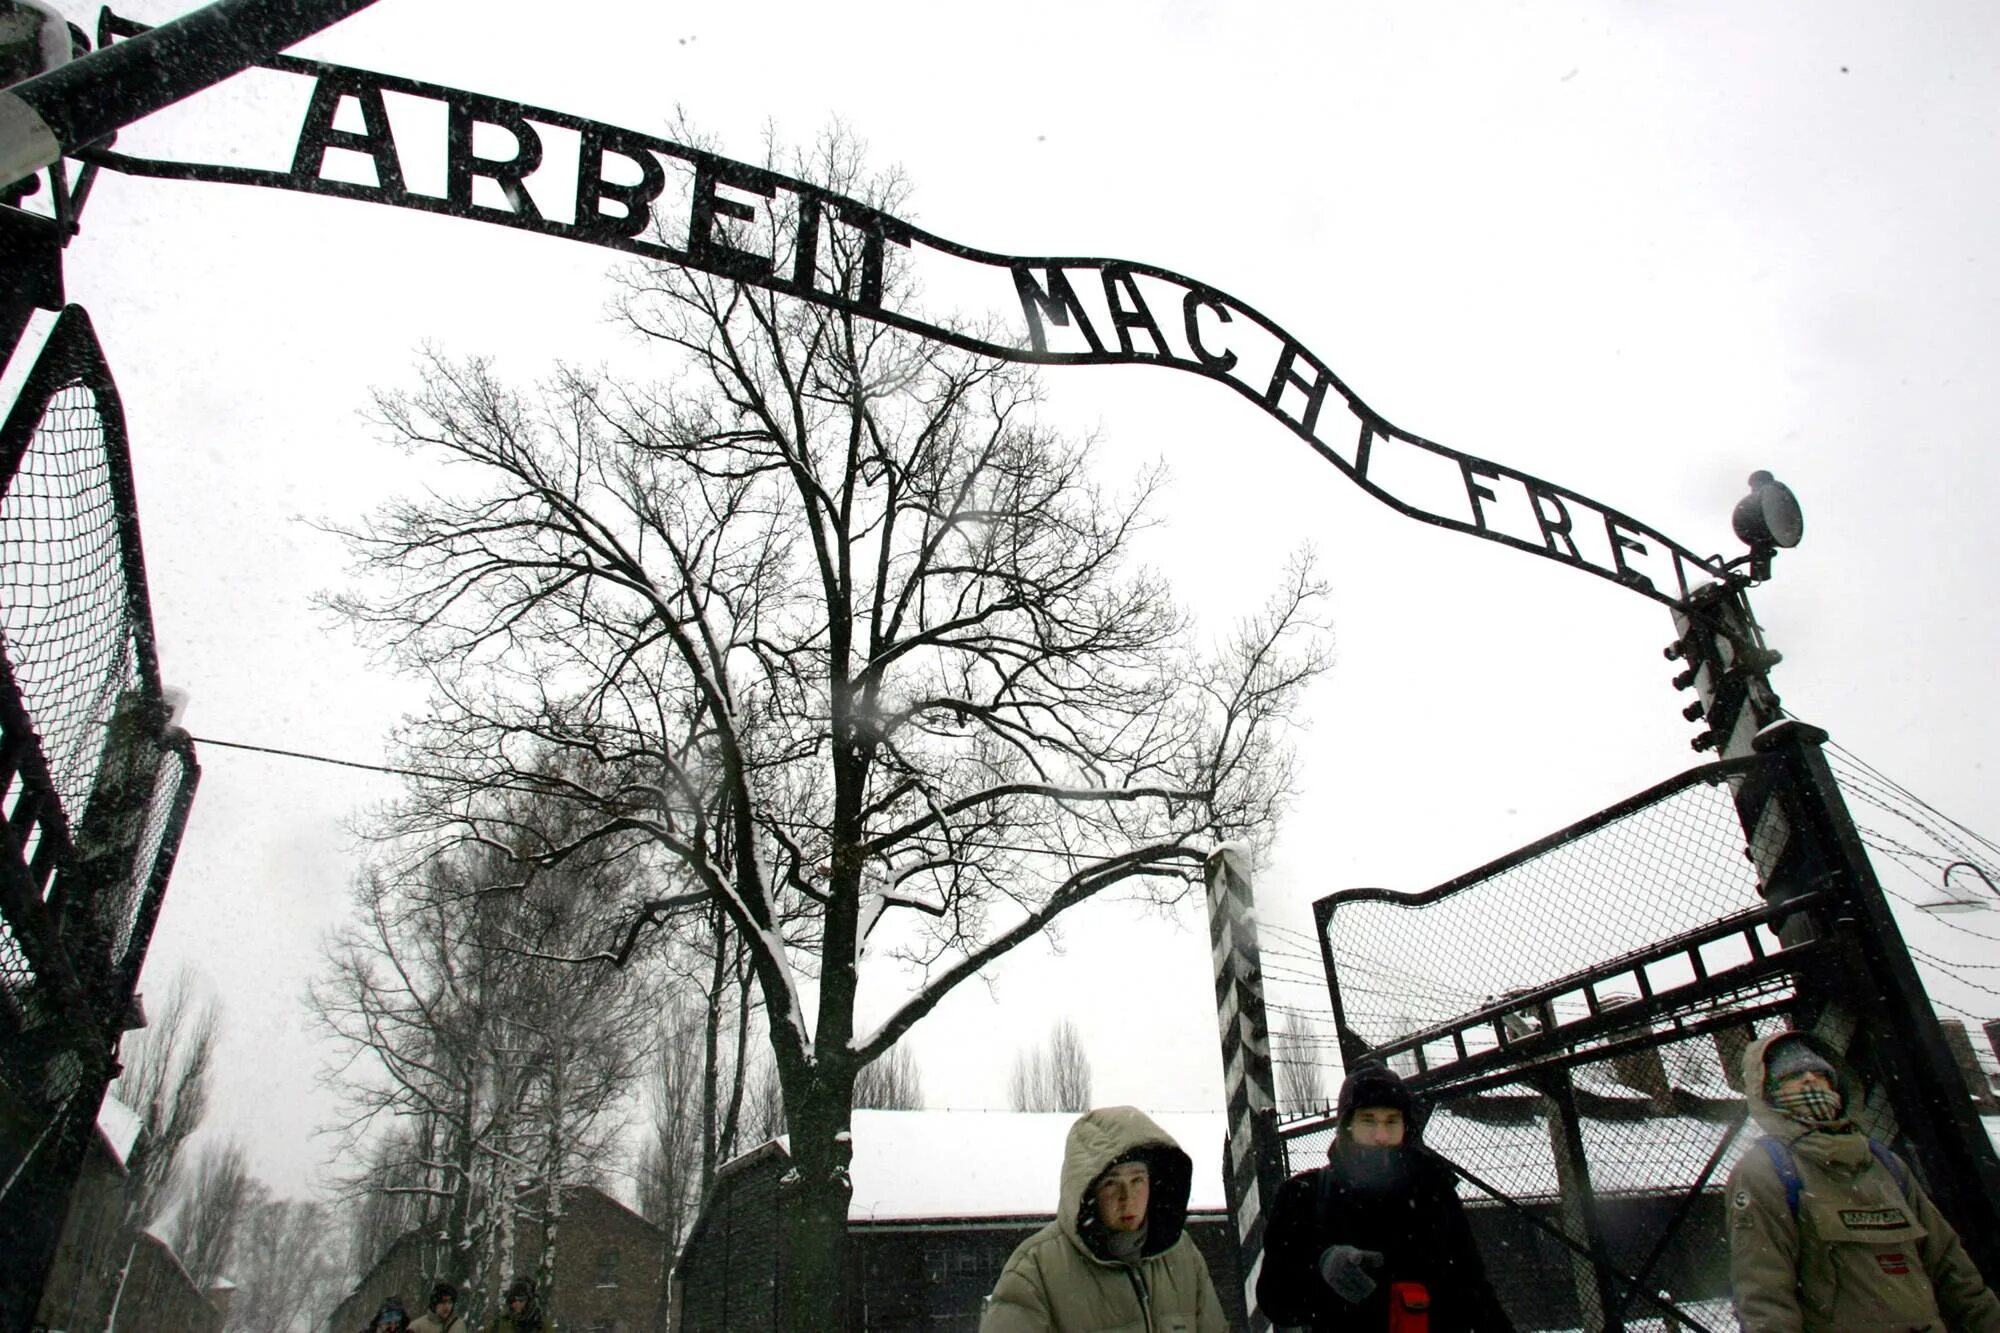 Arbeit macht frei Освенцим ворота. Арбайт Махт Фрай Освенцим. Arbeit macht frei ворота. Ворота лагеря Освенцим.